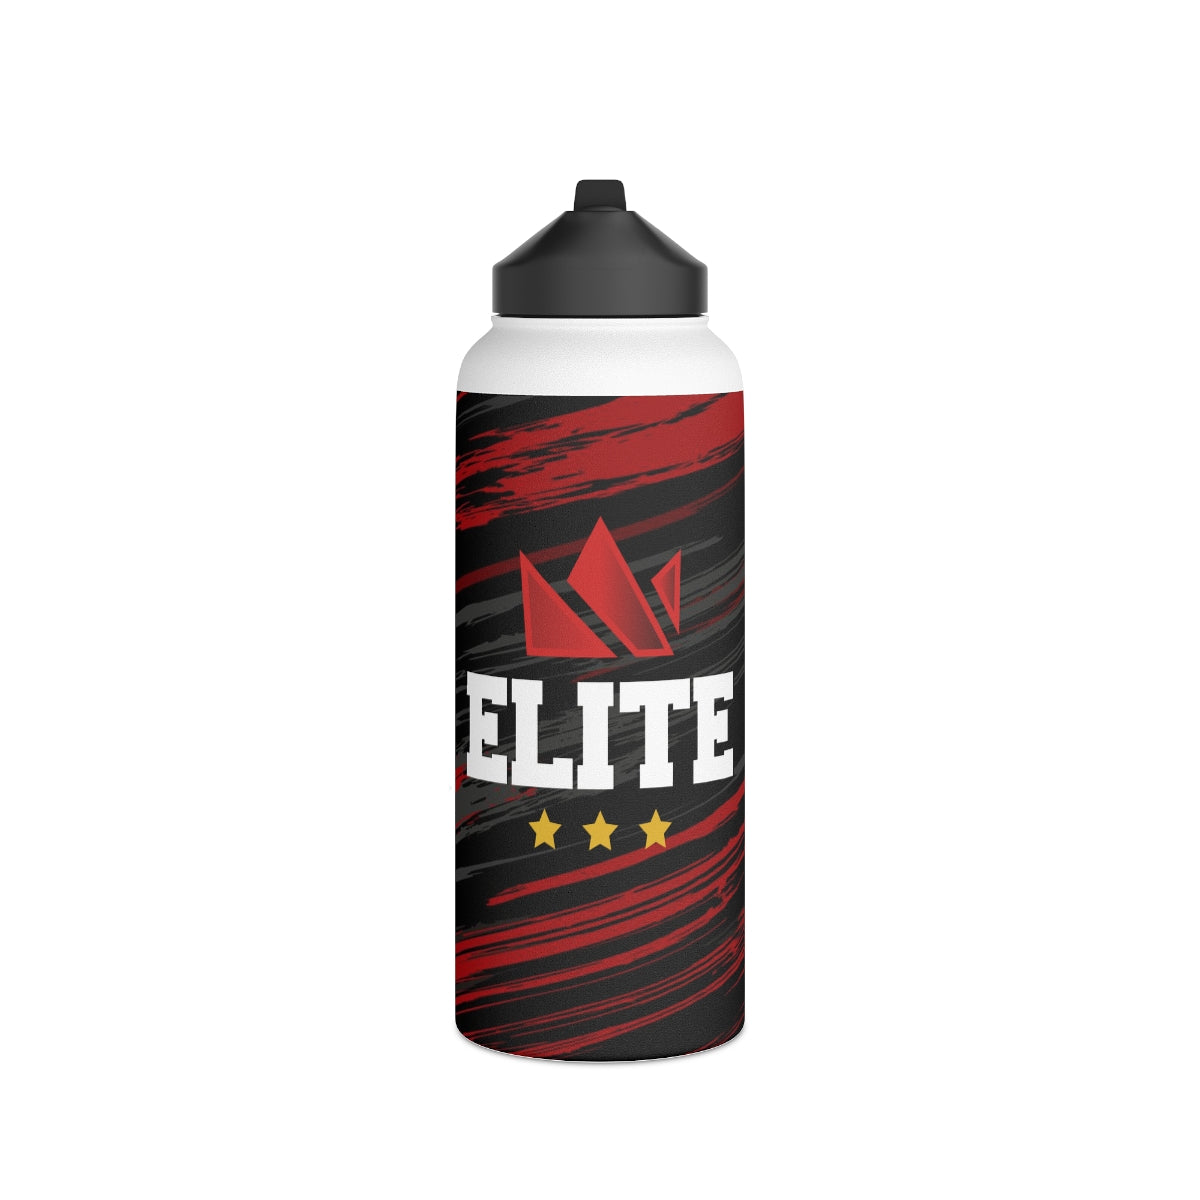 EliteTeam.Tv Stainless Steel Water Bottle, Standard Lid